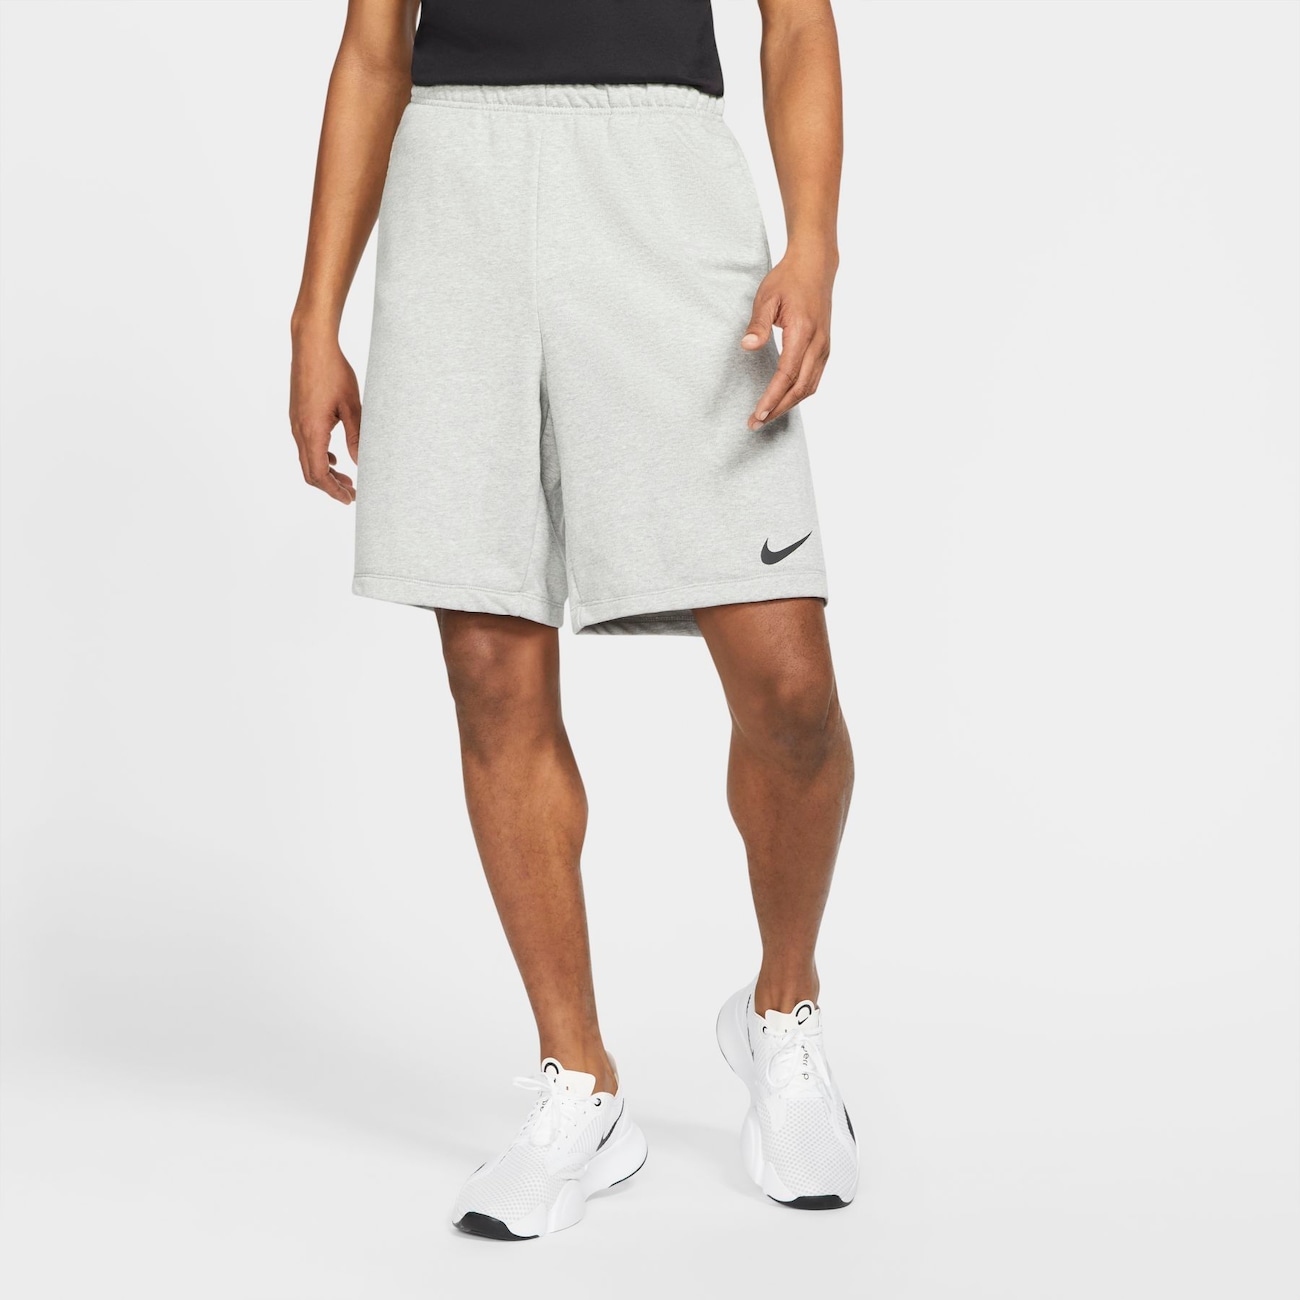 Shorts Nike Dry Masculino